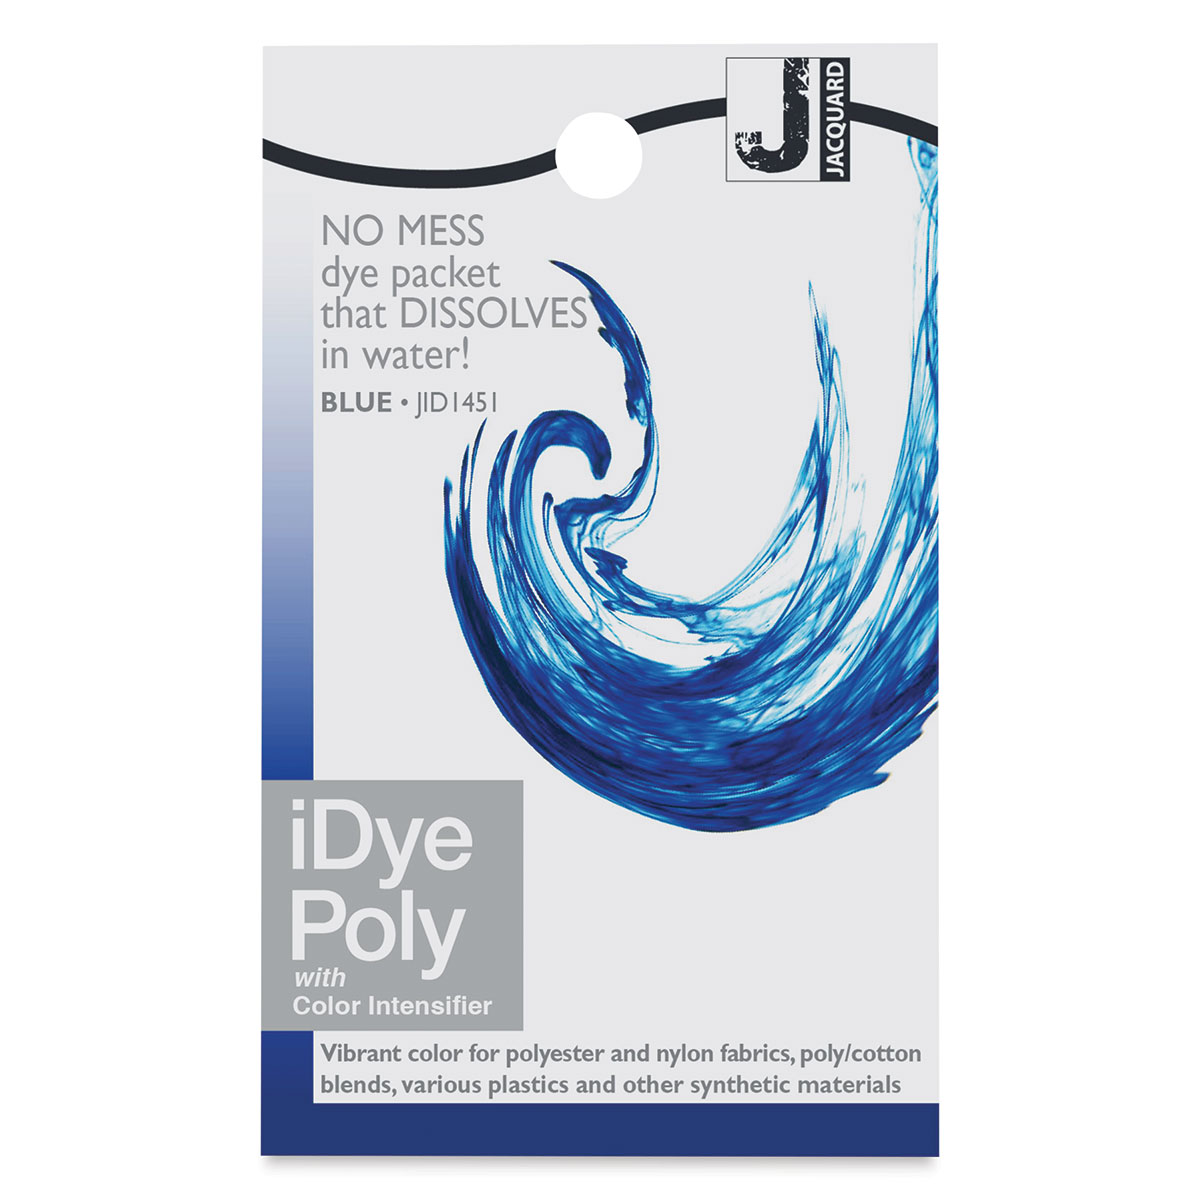 Jacquard iDye Poly for Art Polyester/Nylon Materials | BLICK